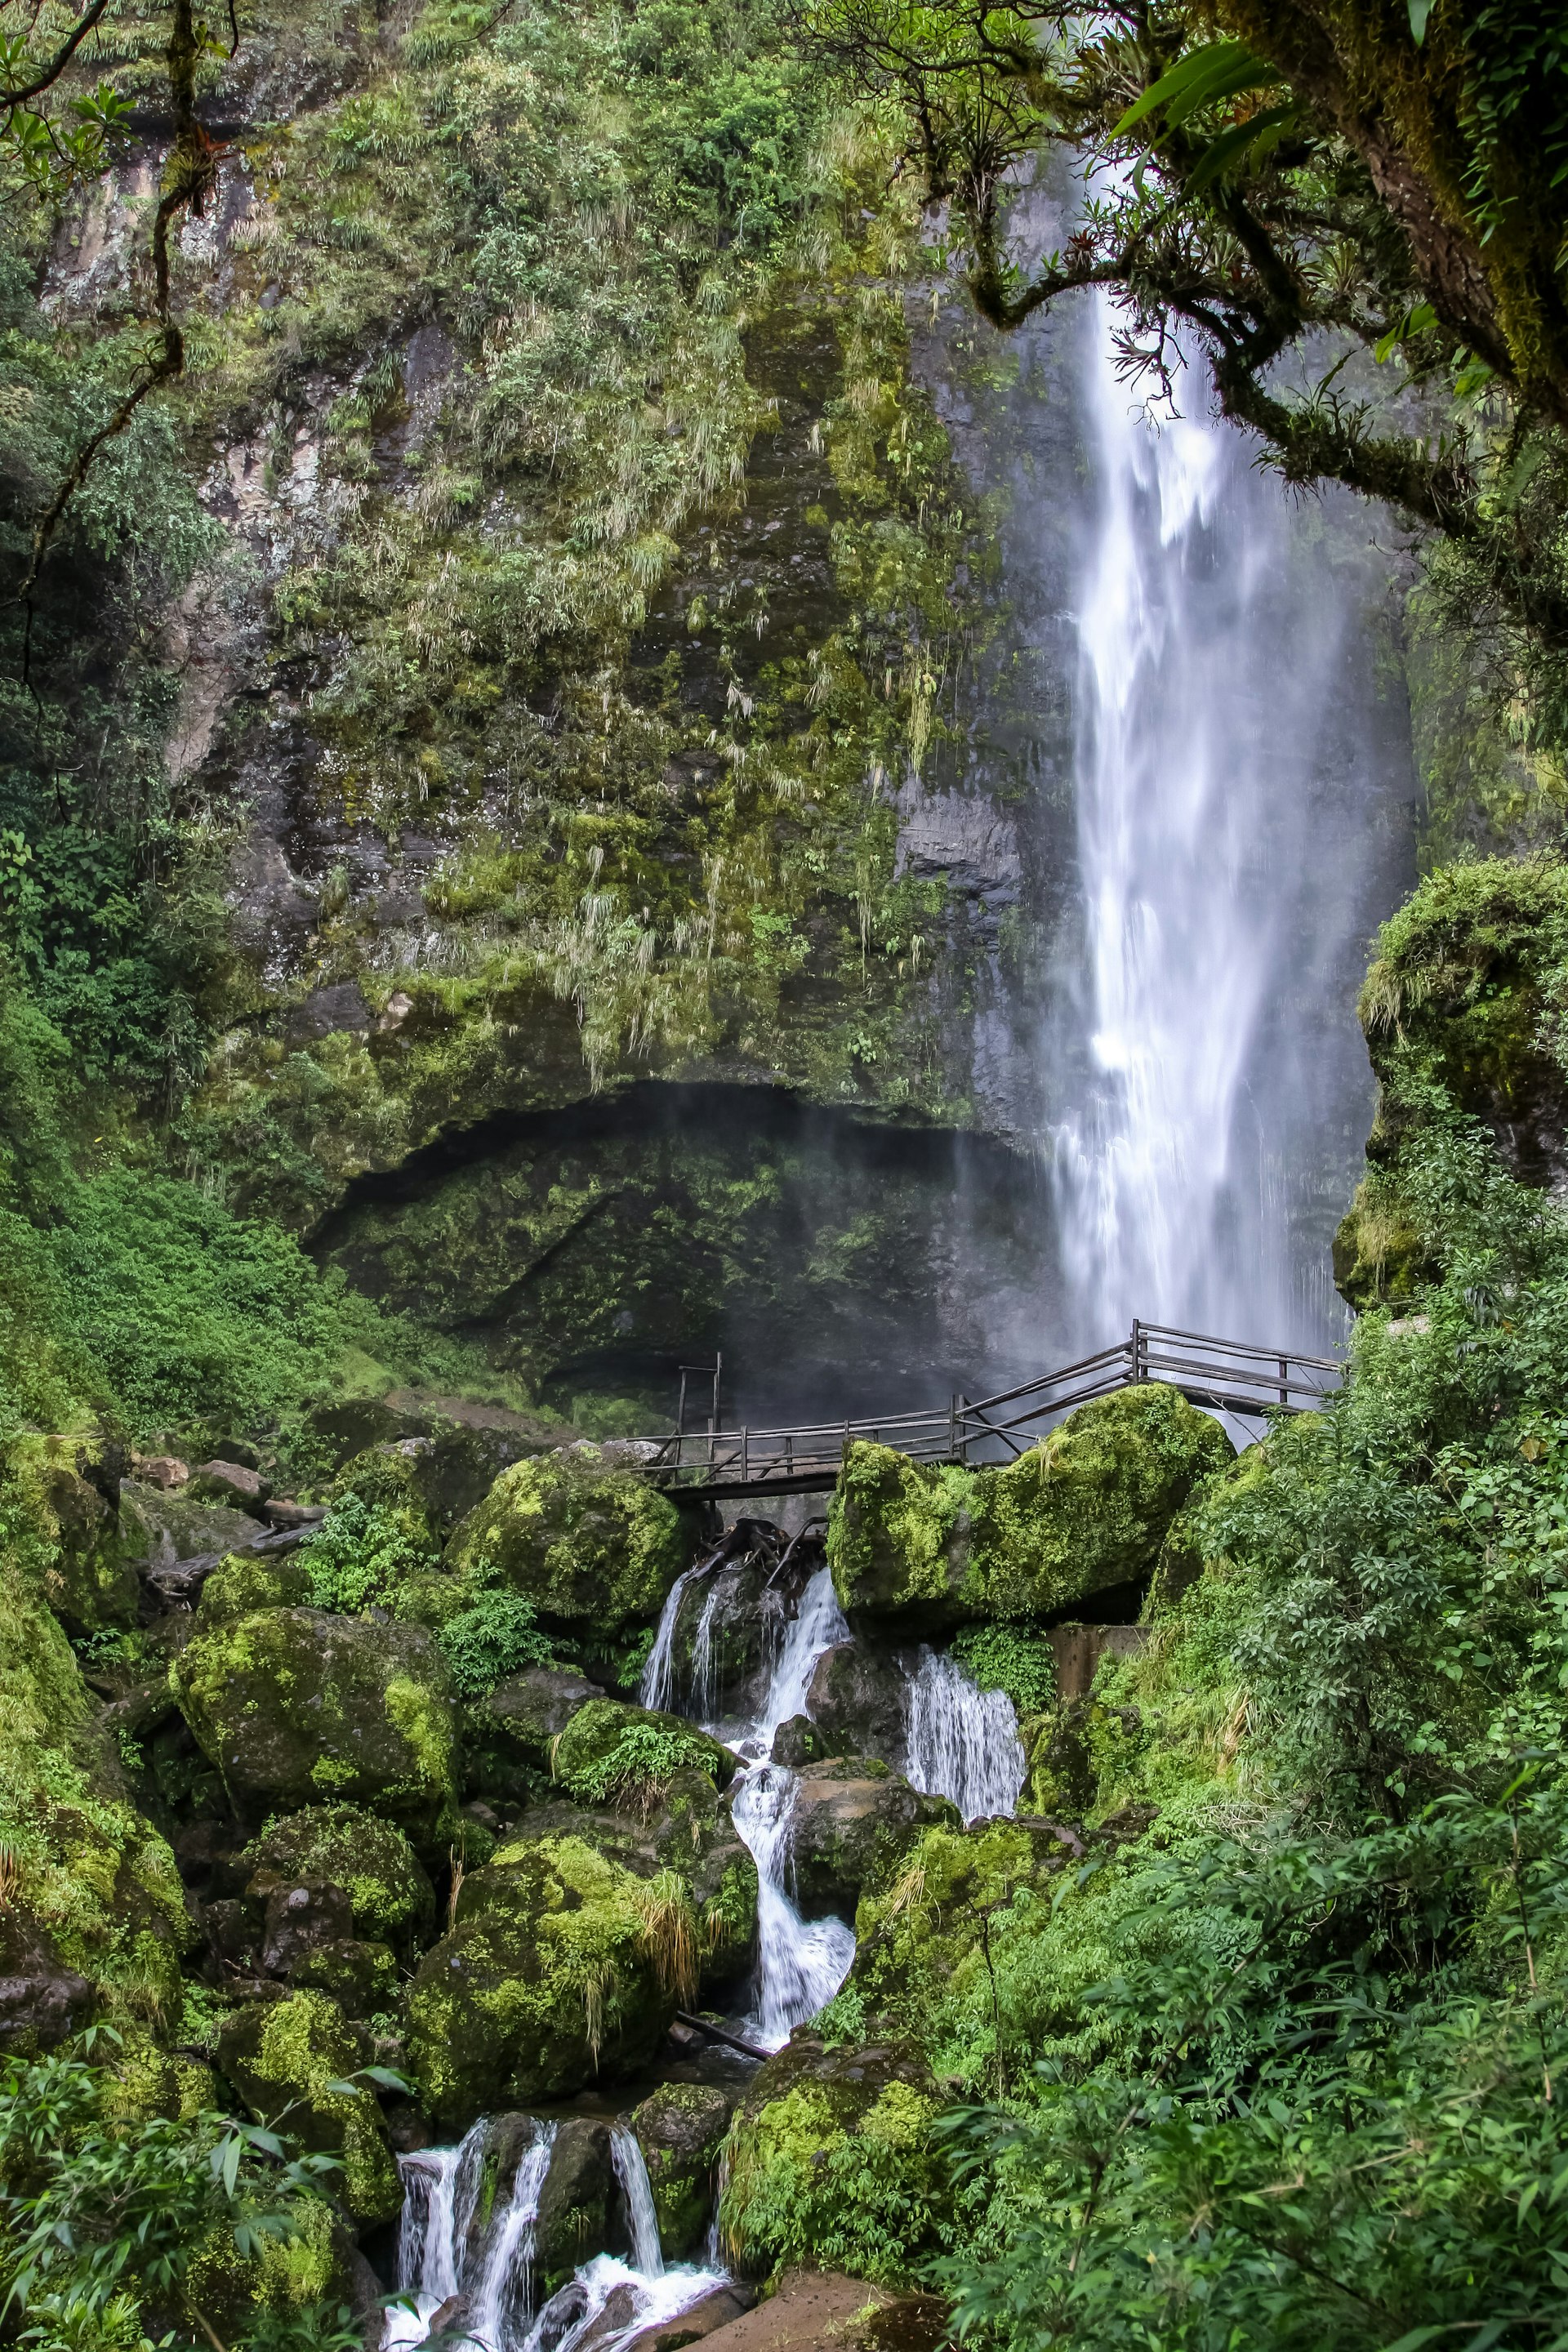 Chorro de Giron, a scenic waterfall in the Yunguilla Valley in Ecuador